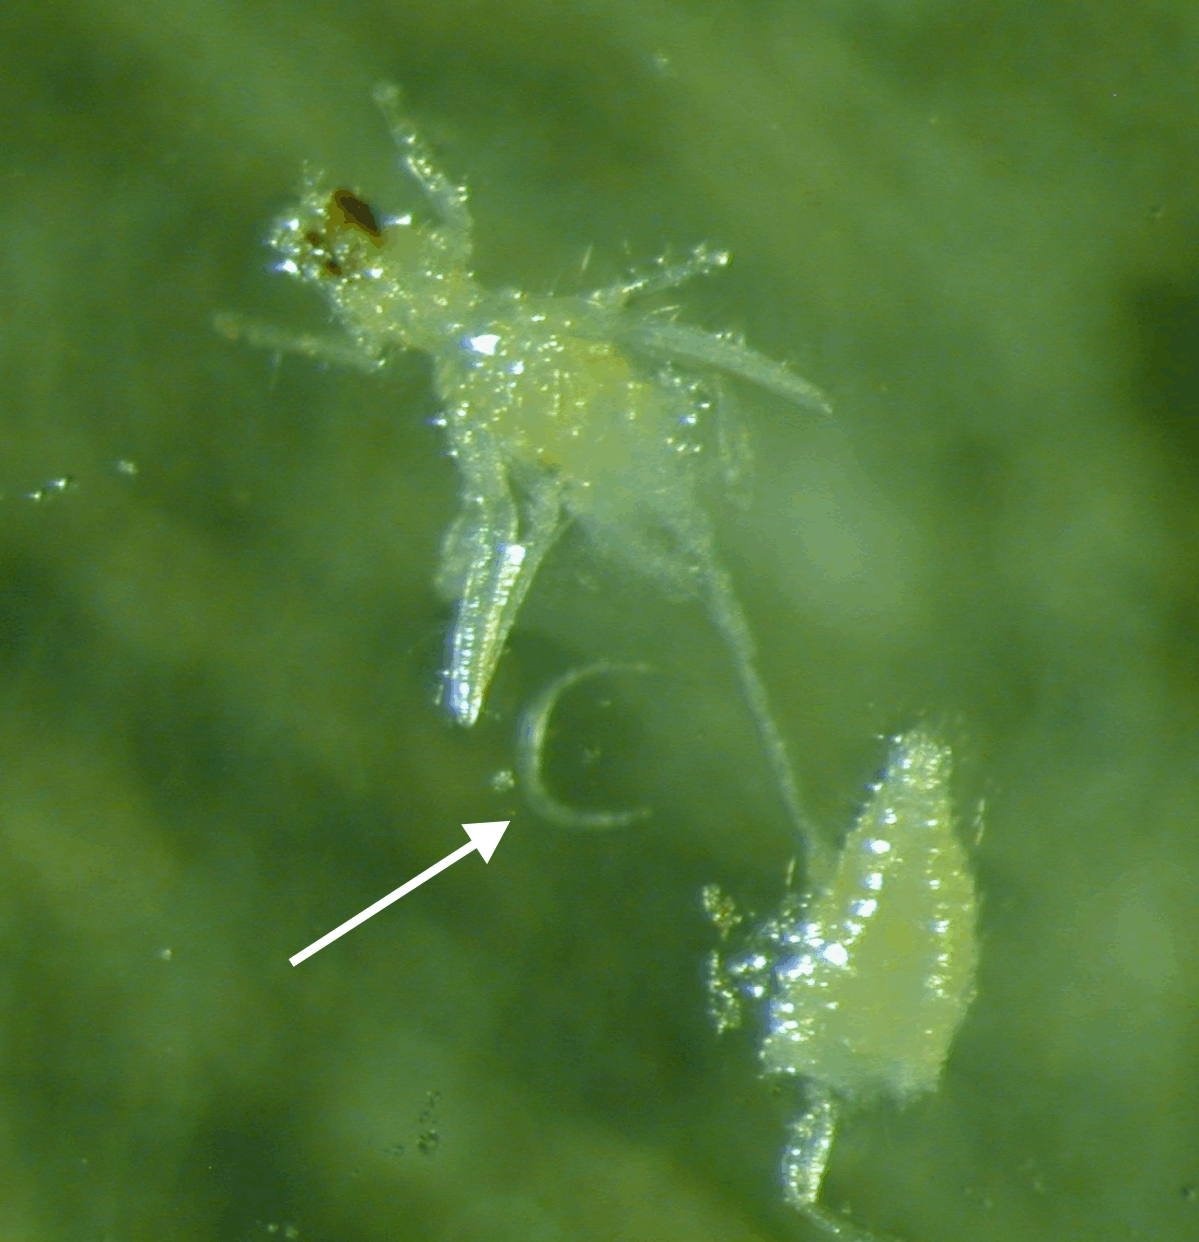 WFT with nematode. Image © ADAS Horticulture